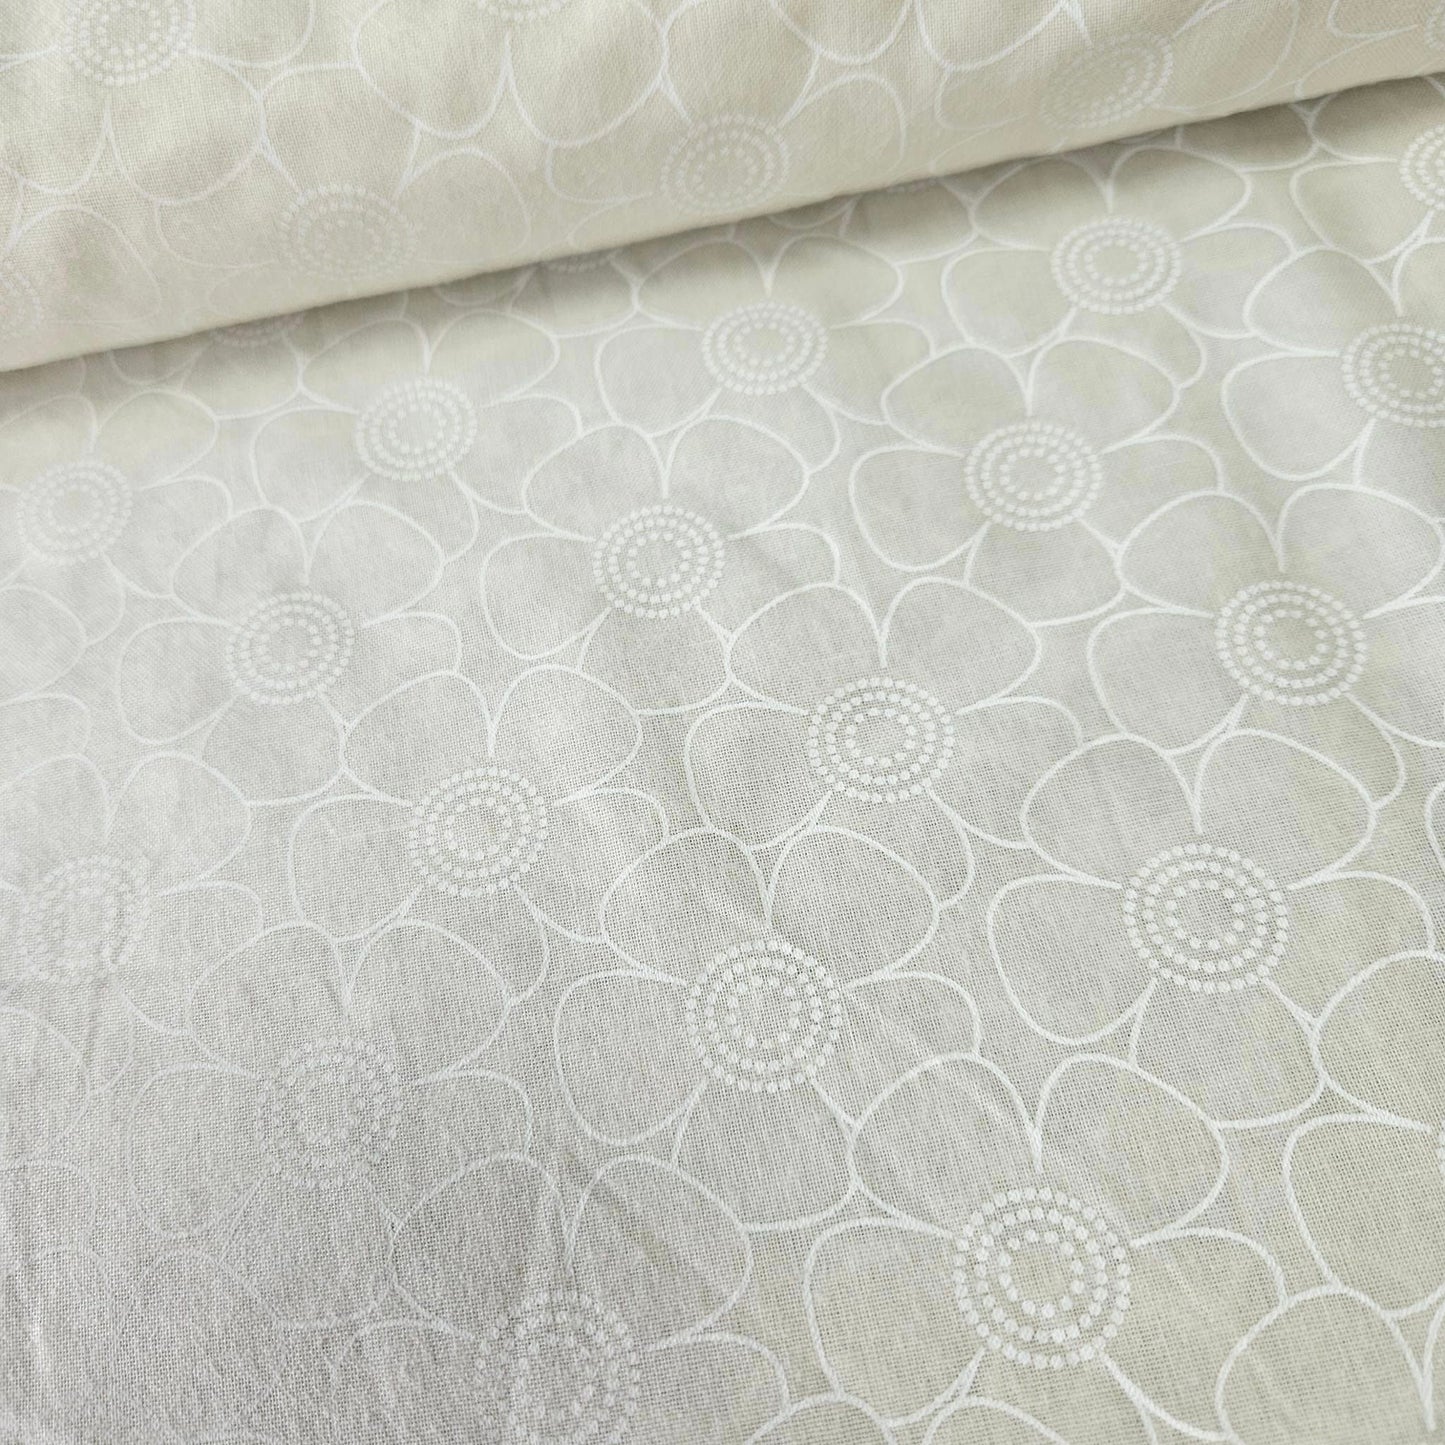 Tone on Tone - White on Cream Flowers 48503 100% Cotton Fabric